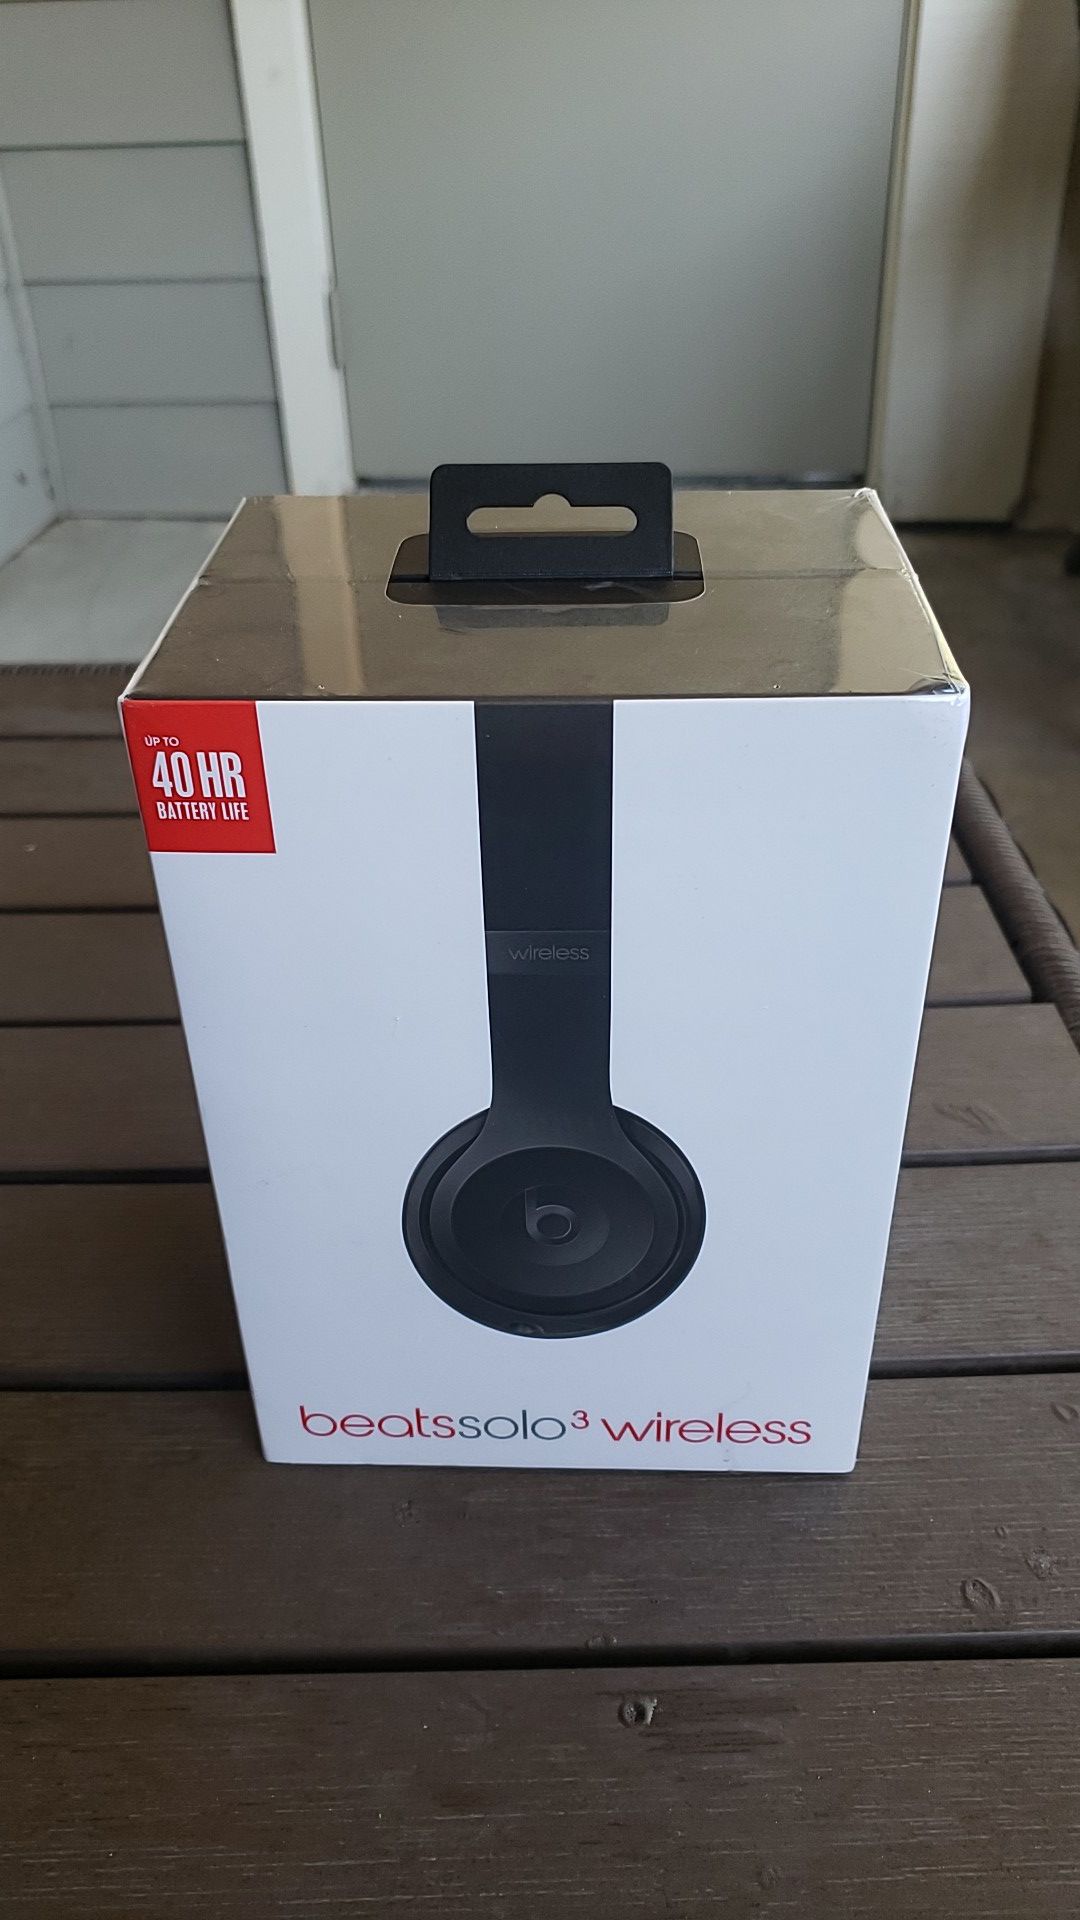 Beats Solo 3 Wireless - Brand new (unopened)